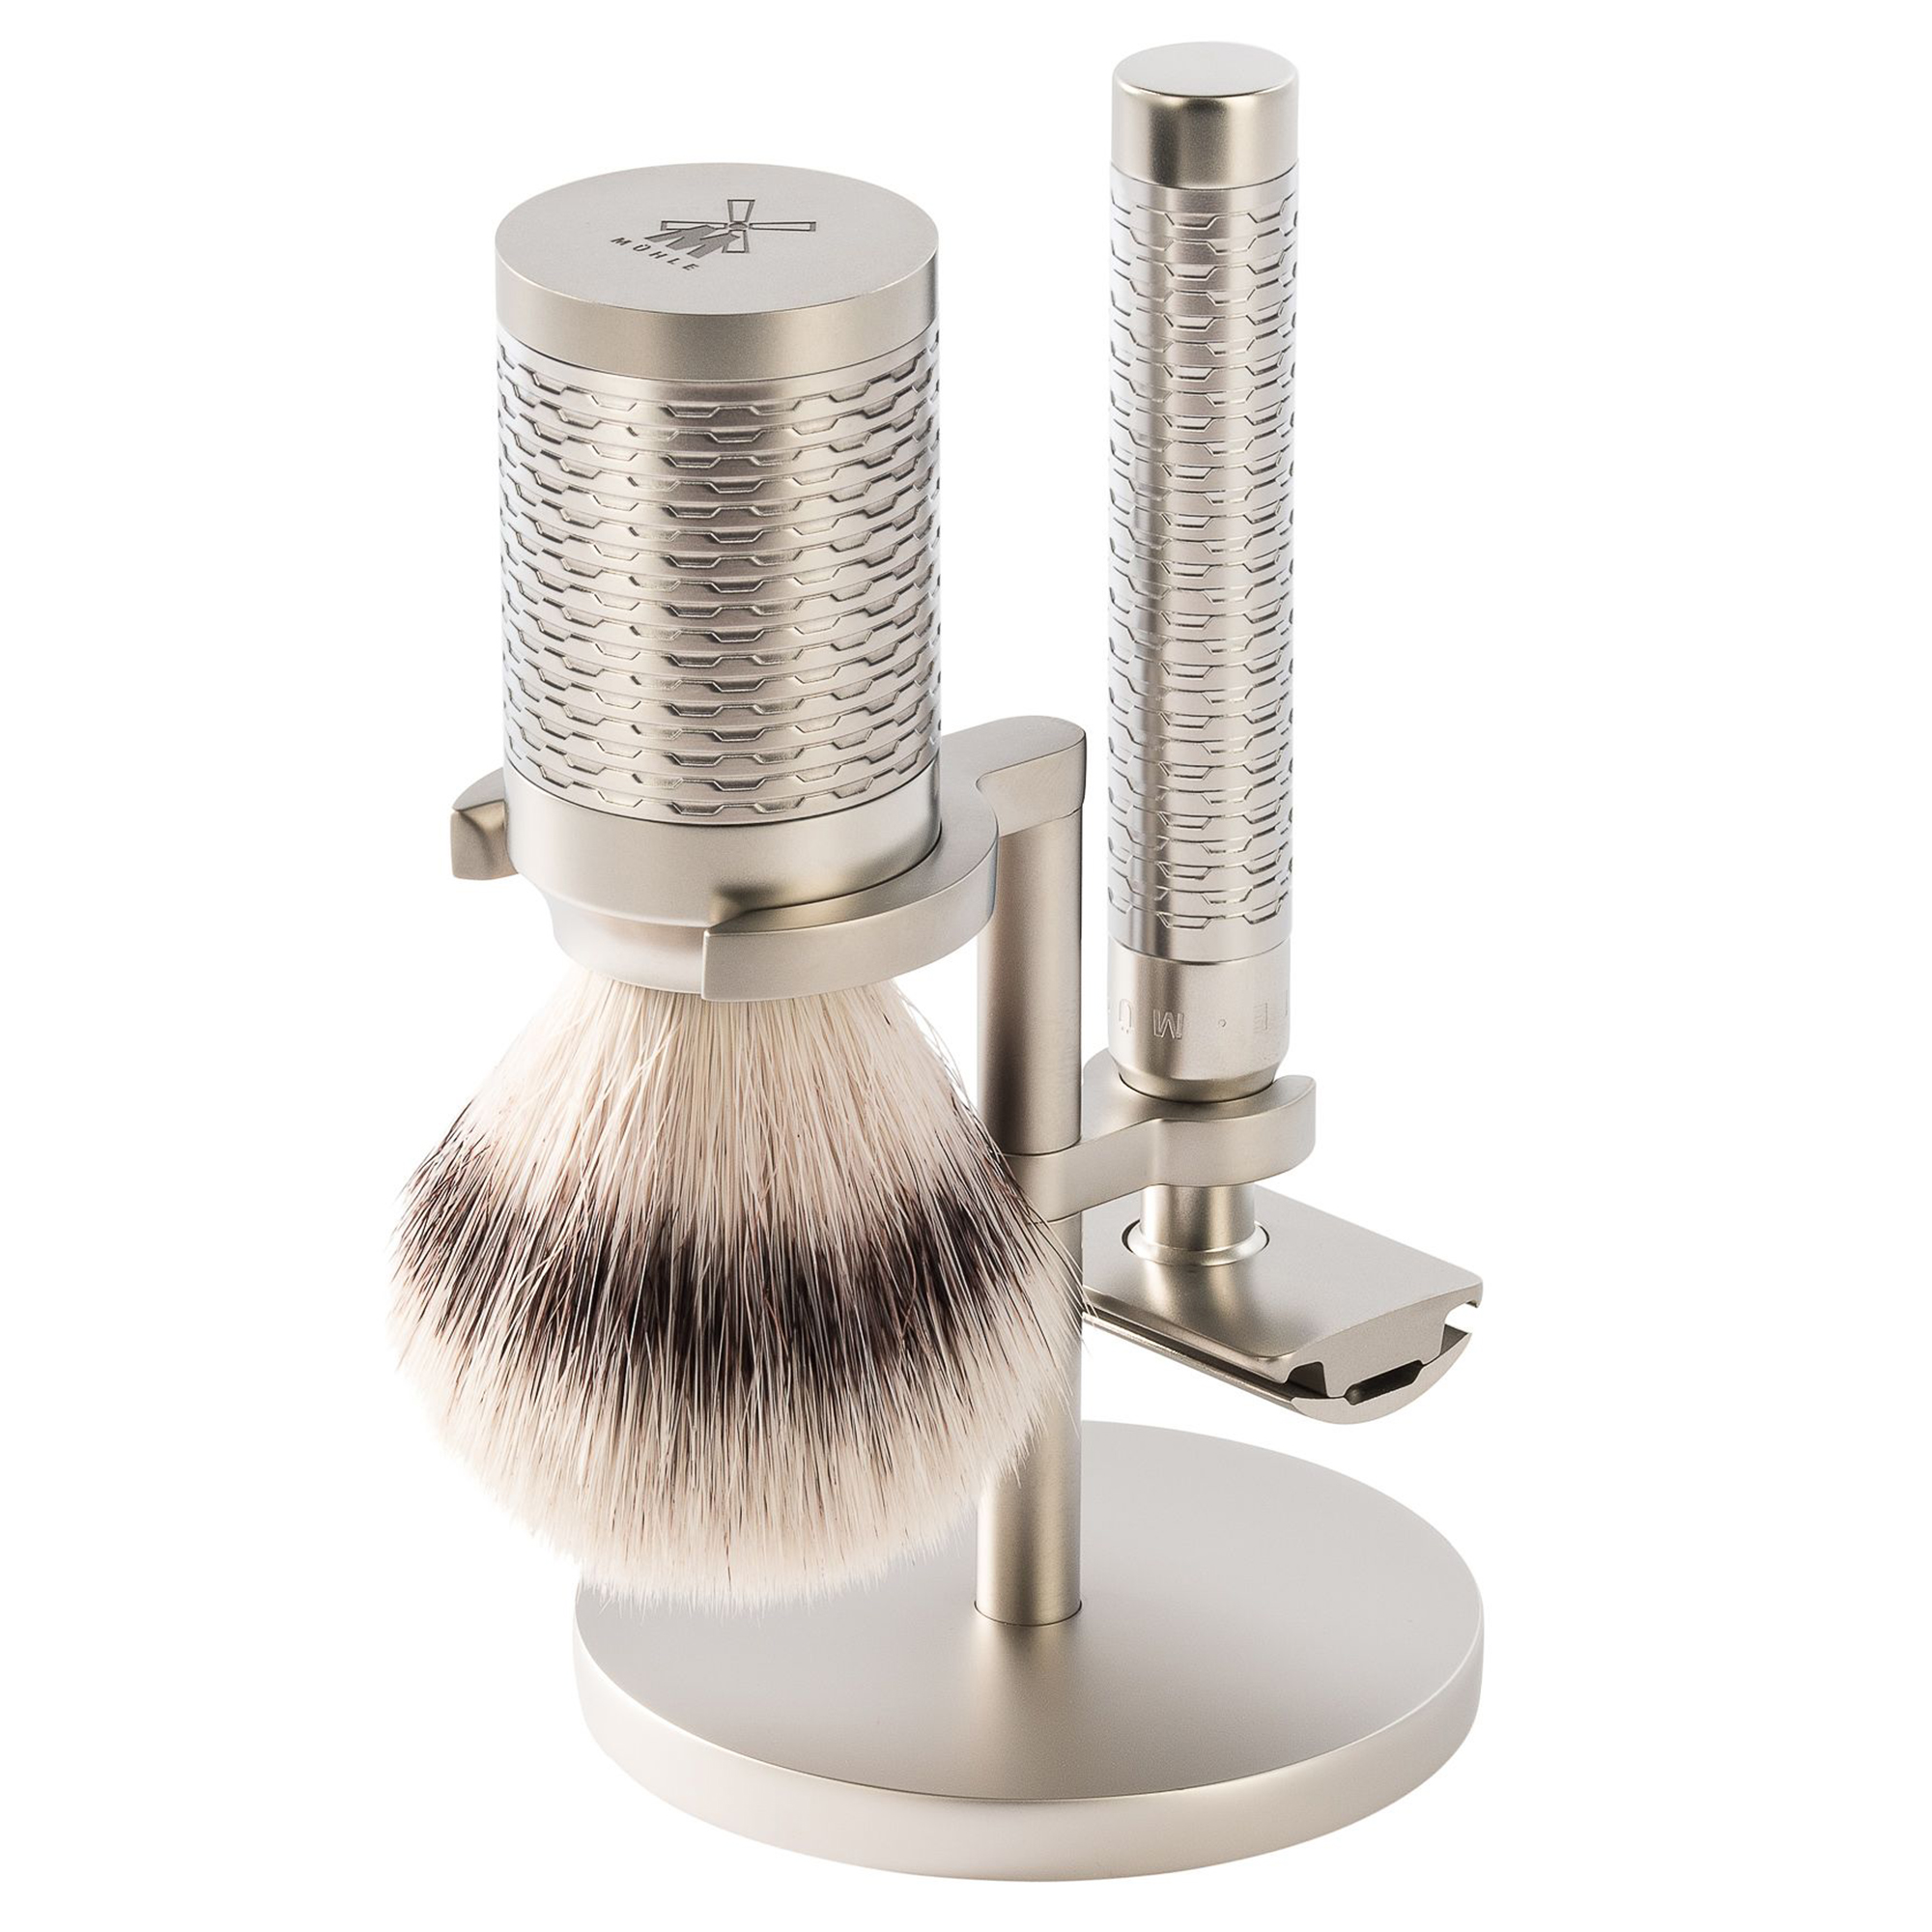 Muhle Rocca Stainless Steel Shaving Set with Synthetic Brush executive shaving.jpeg